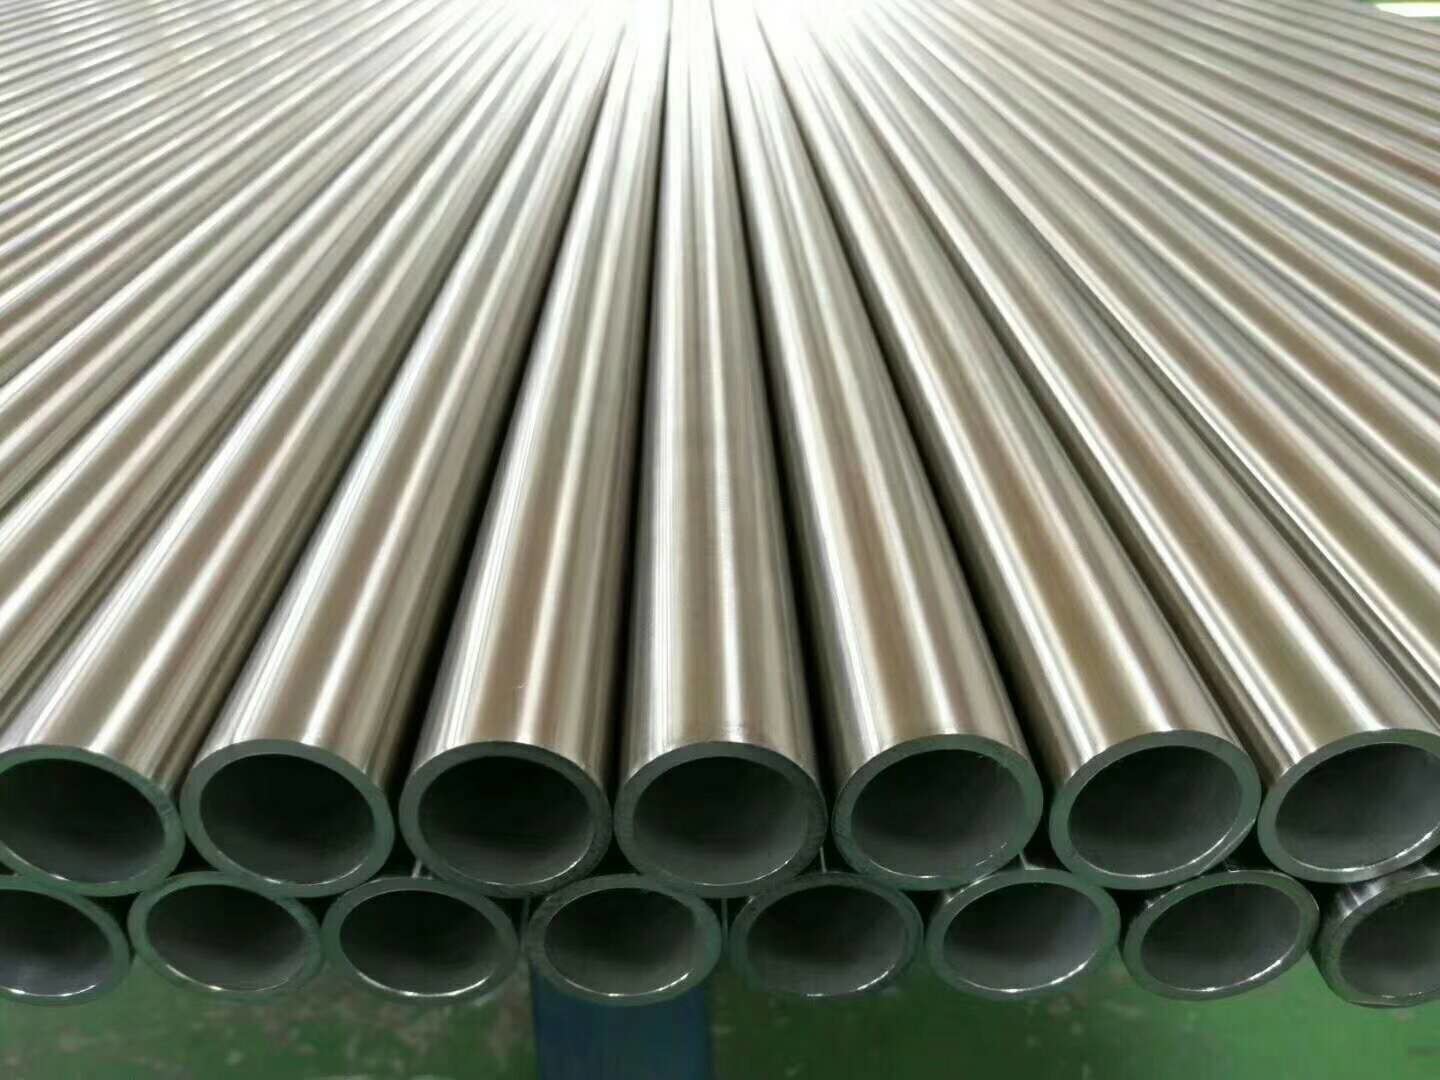 ps20636699-duplex_stainless_steel_precision_steel_tube_s32205_seamless_welded_steel_tubing